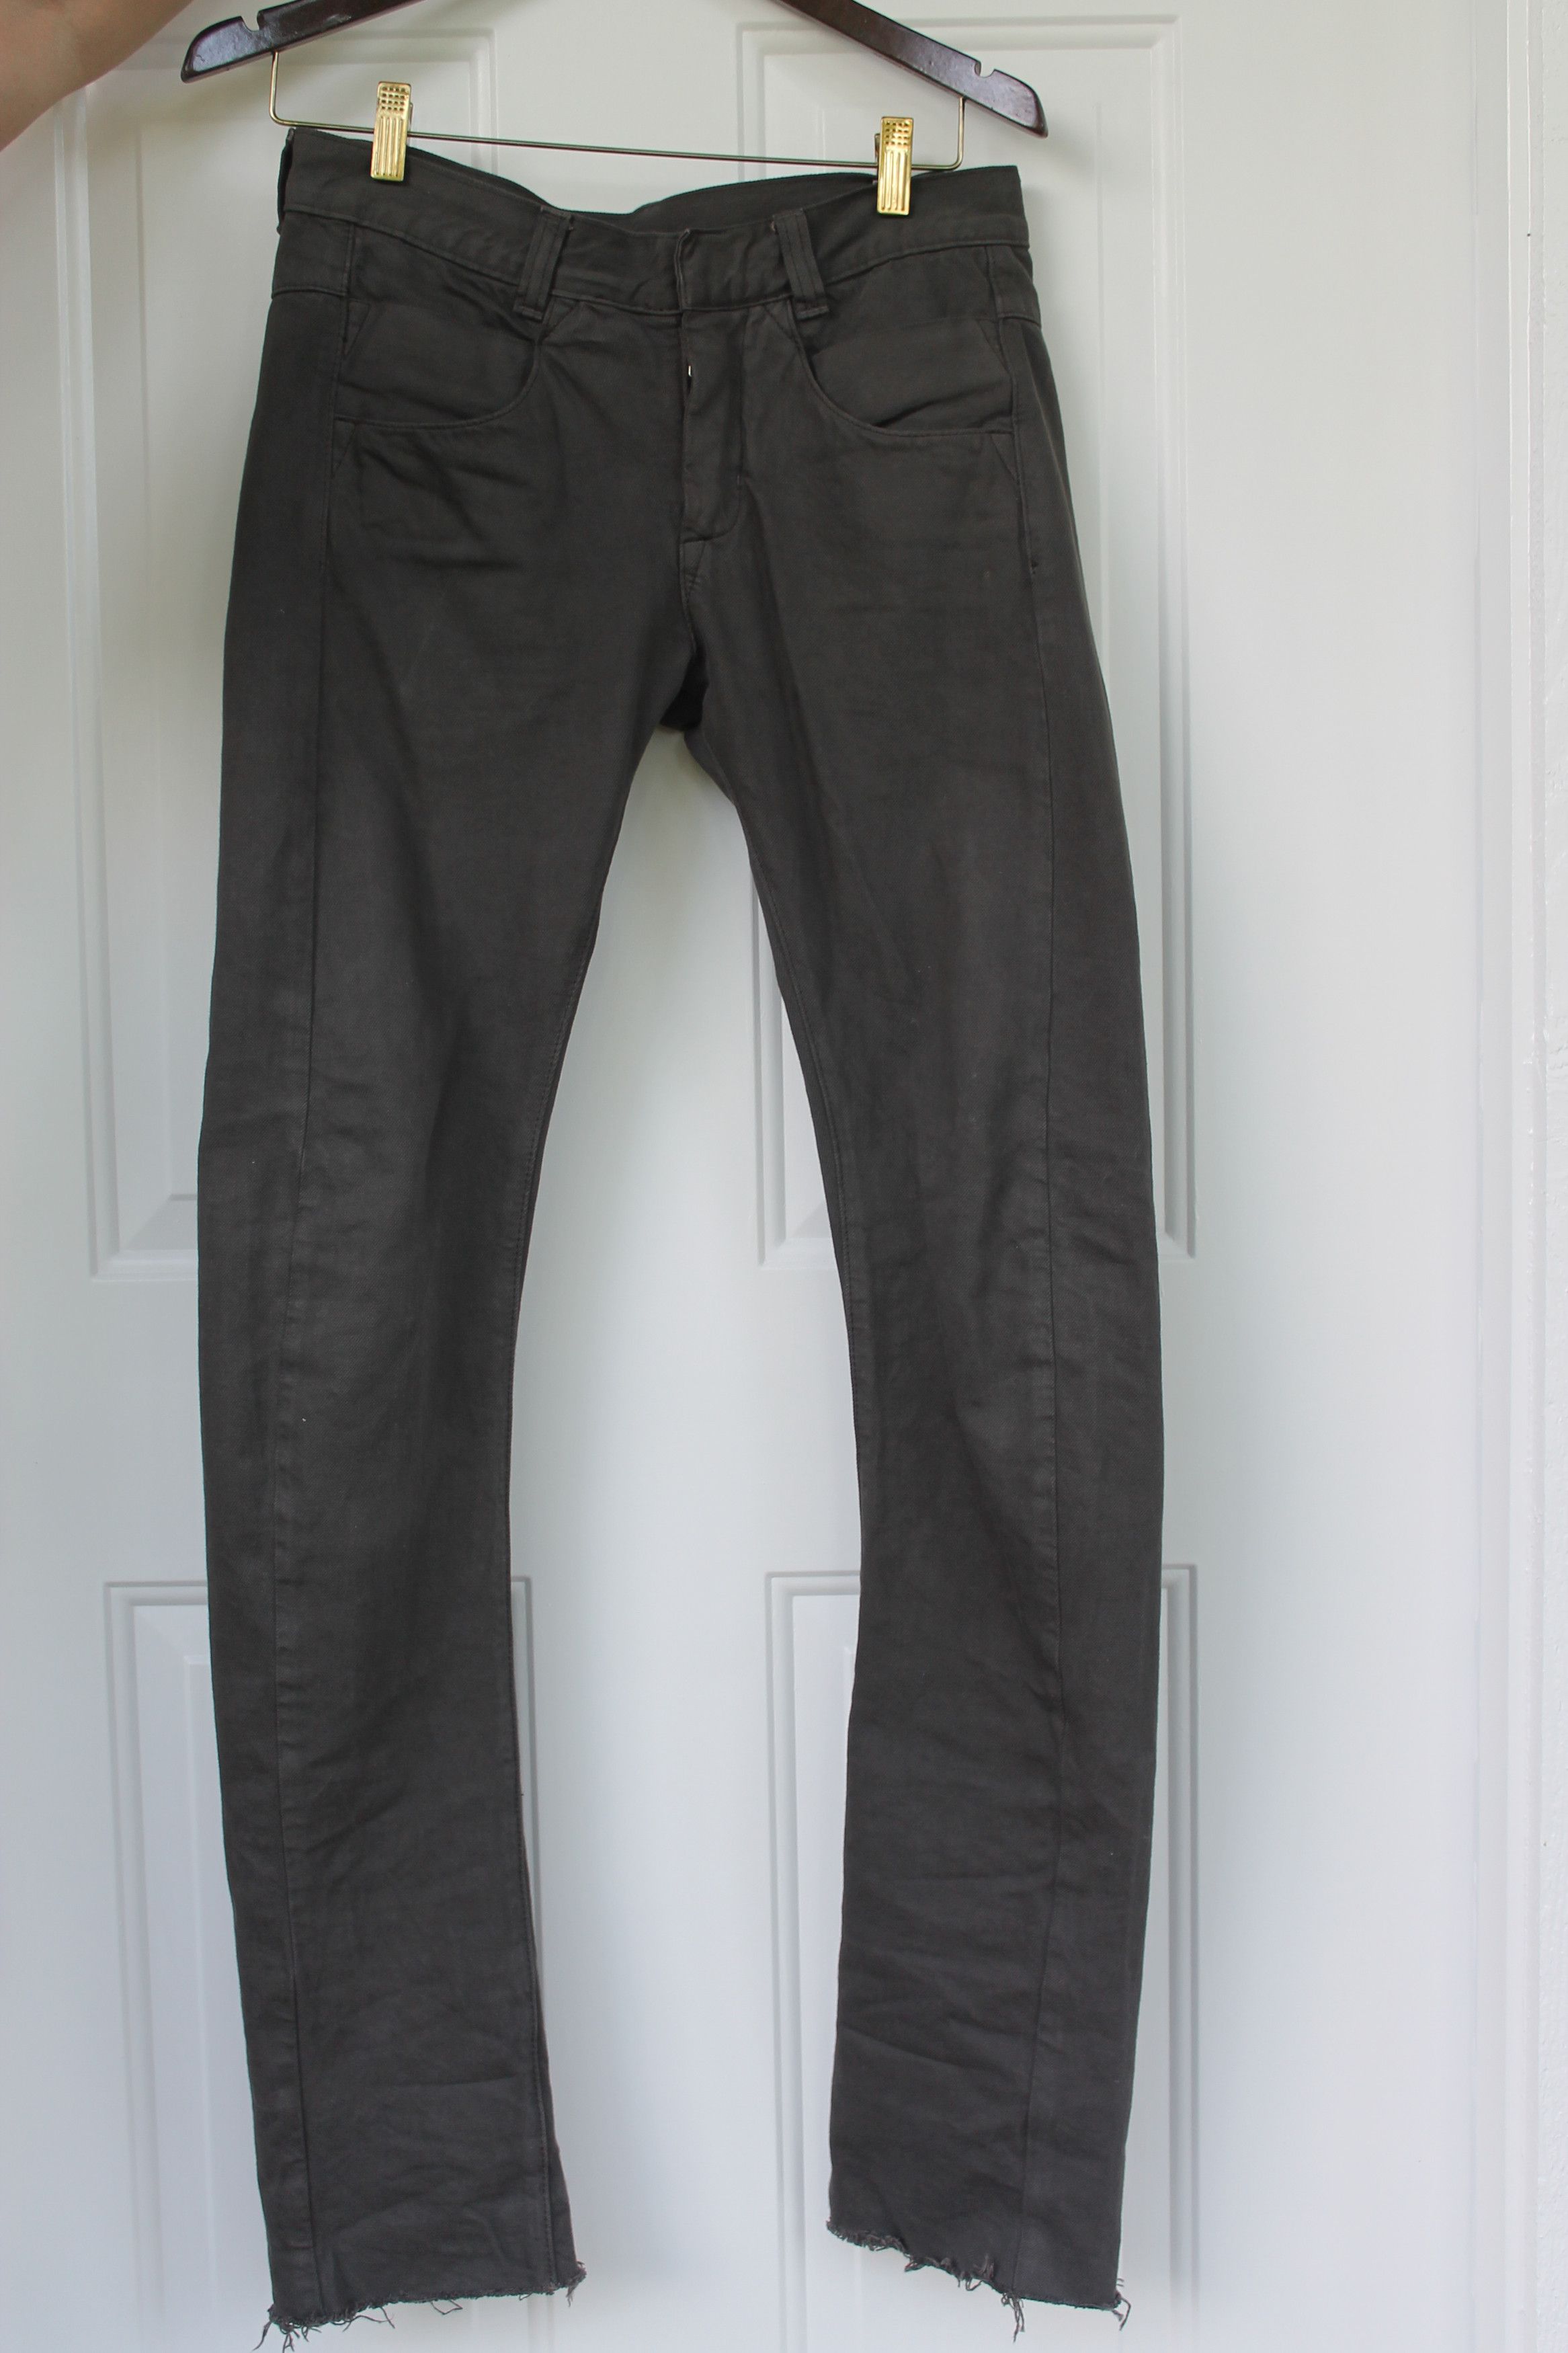 Damir Doma Dark Grey Rough Hem Jeans Size US 28 / EU 44 - 1 Preview